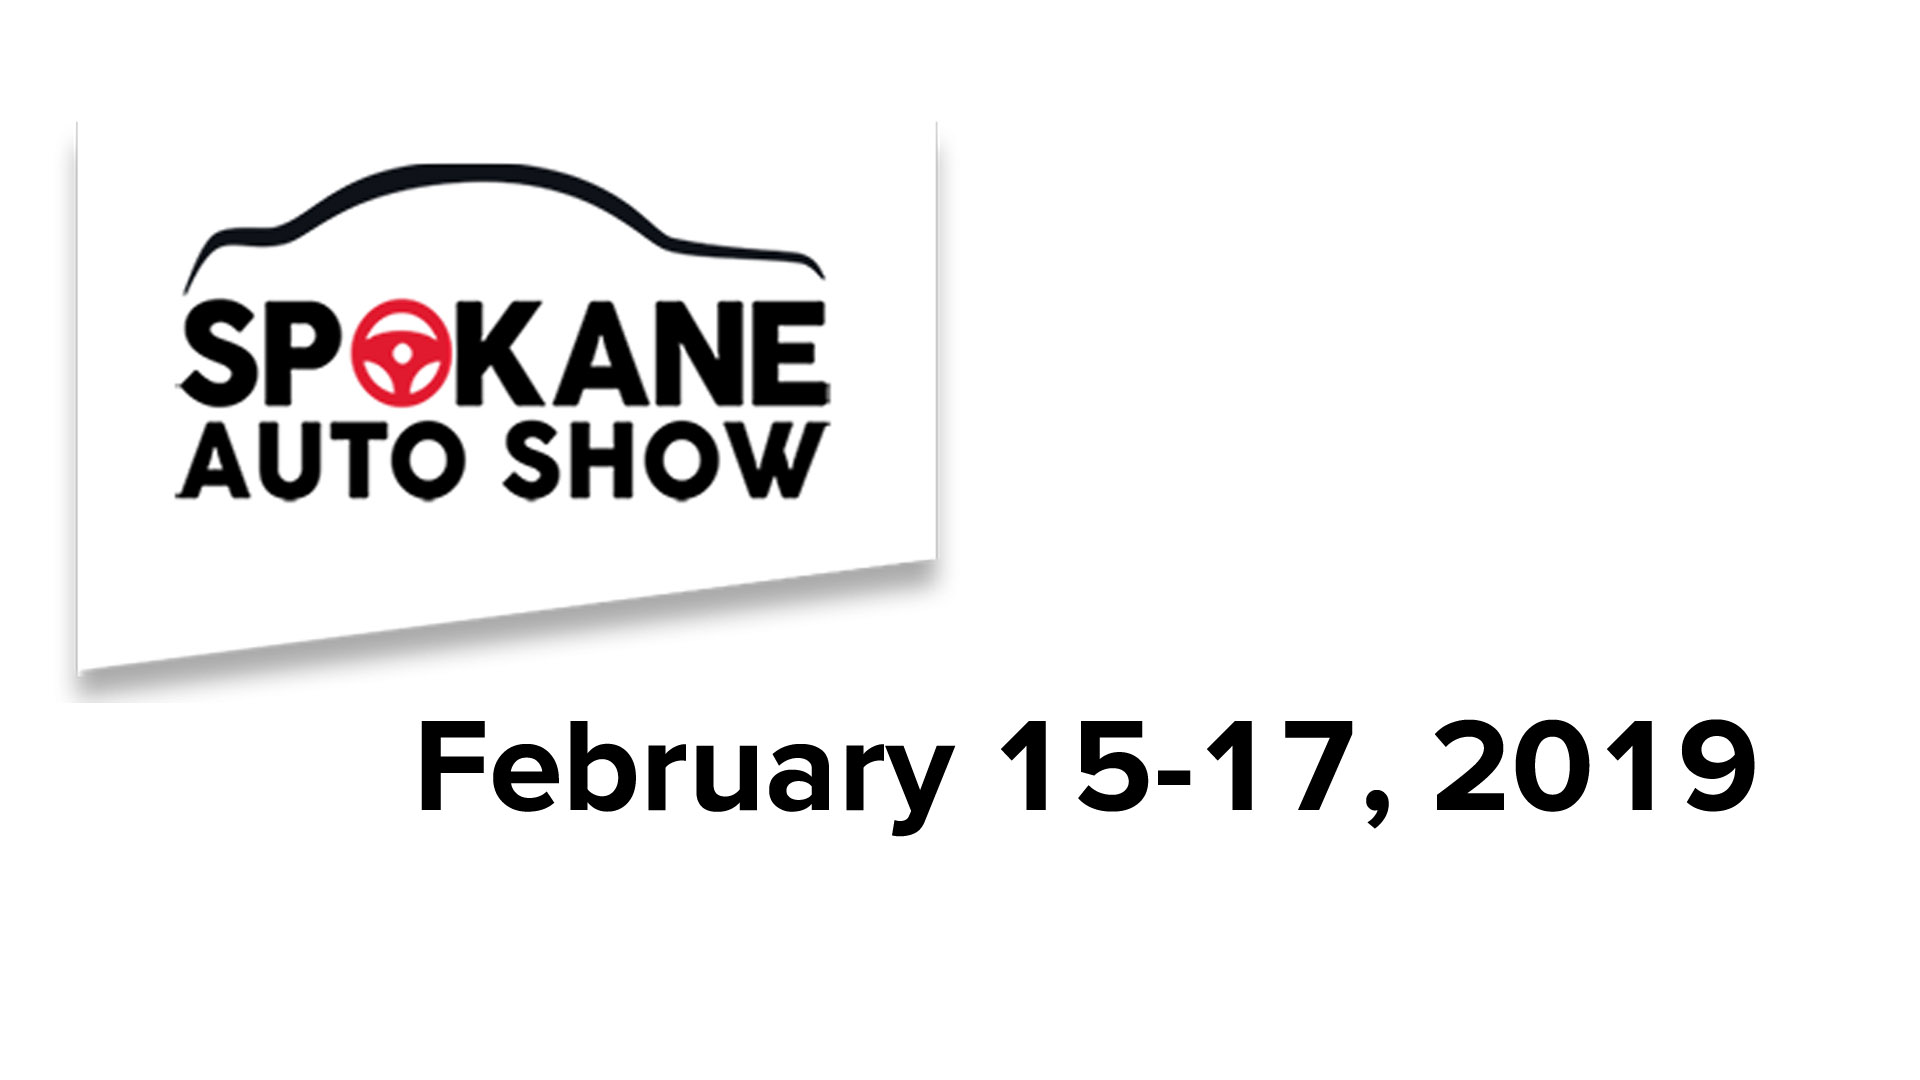 Enter to win tickets to the Spokane Auto Show!